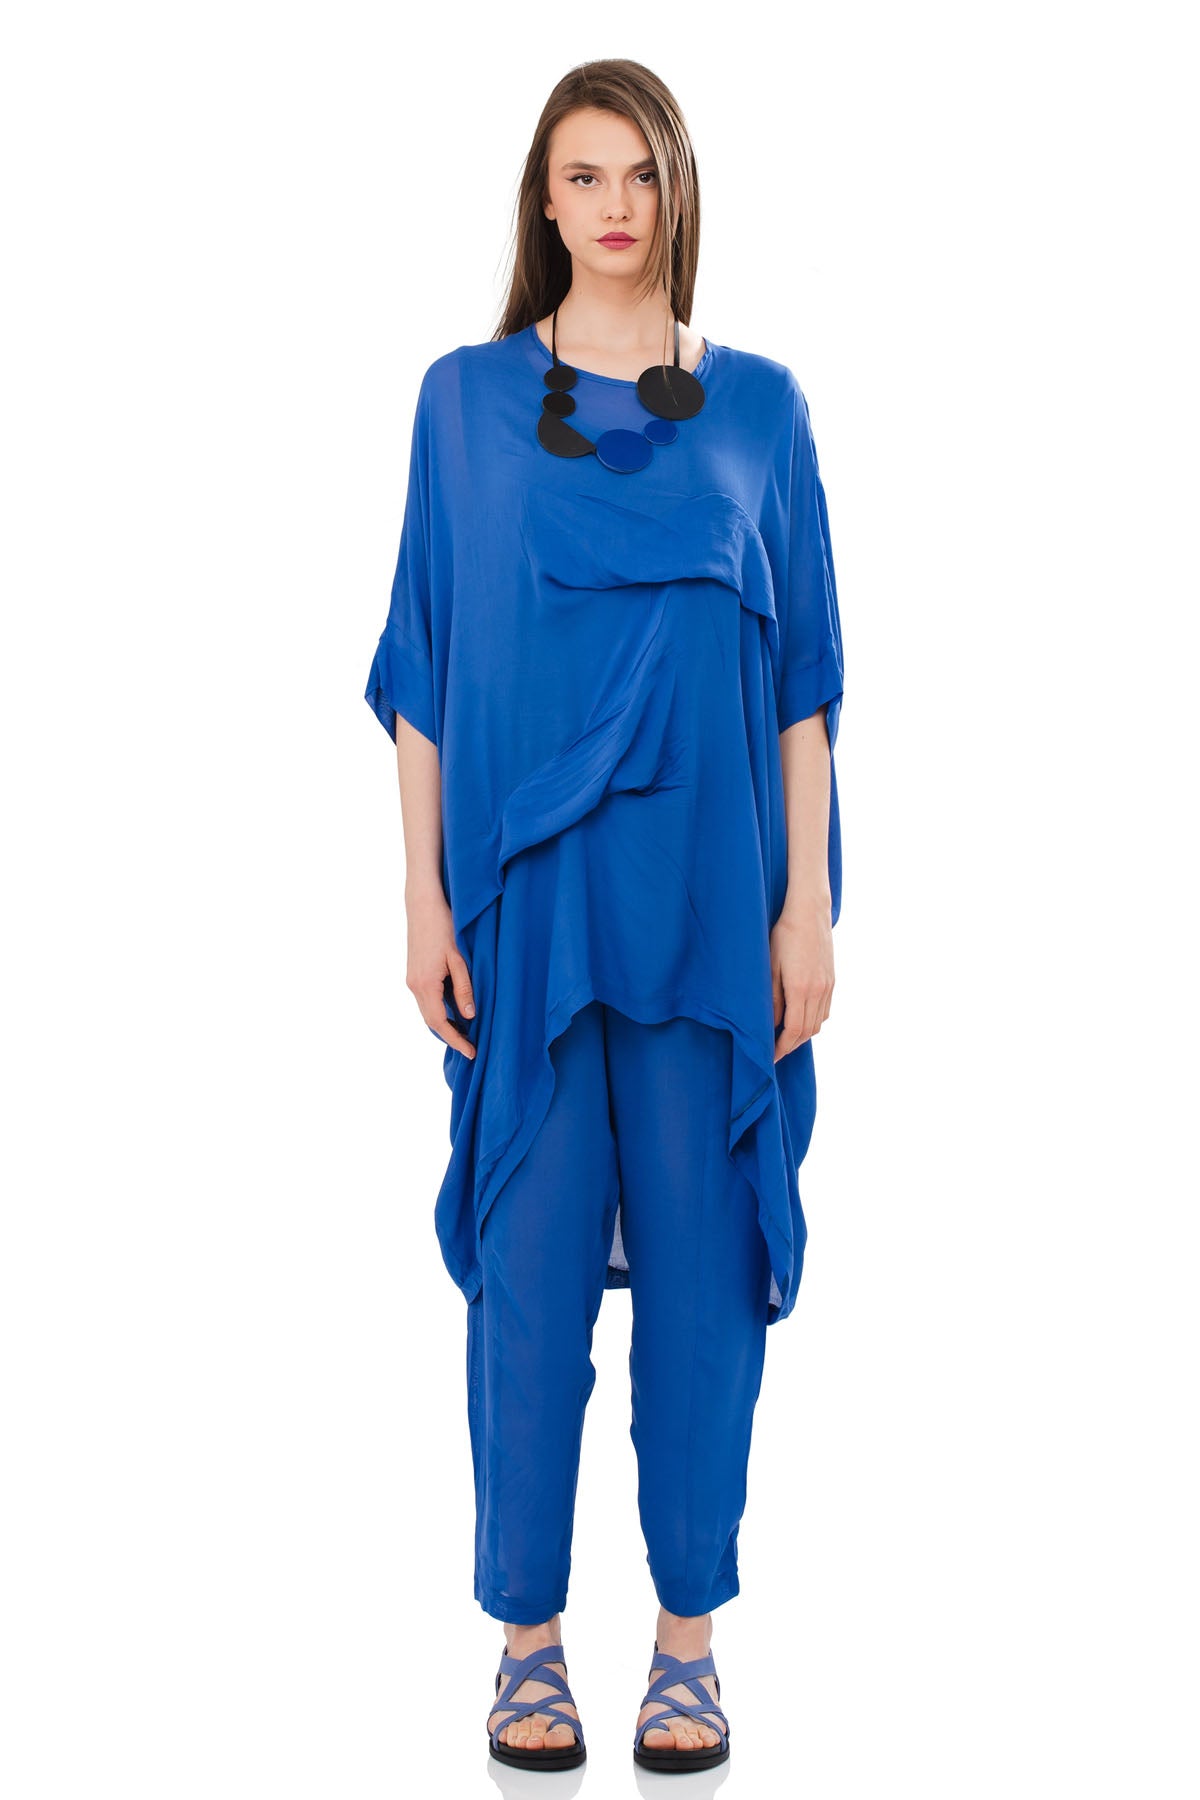 Chic & Simple Συνδυασμός Μπλουζοφόρεμα Κορίνα & Παντελόνι Μυρτώ - Μπλε Ρουά